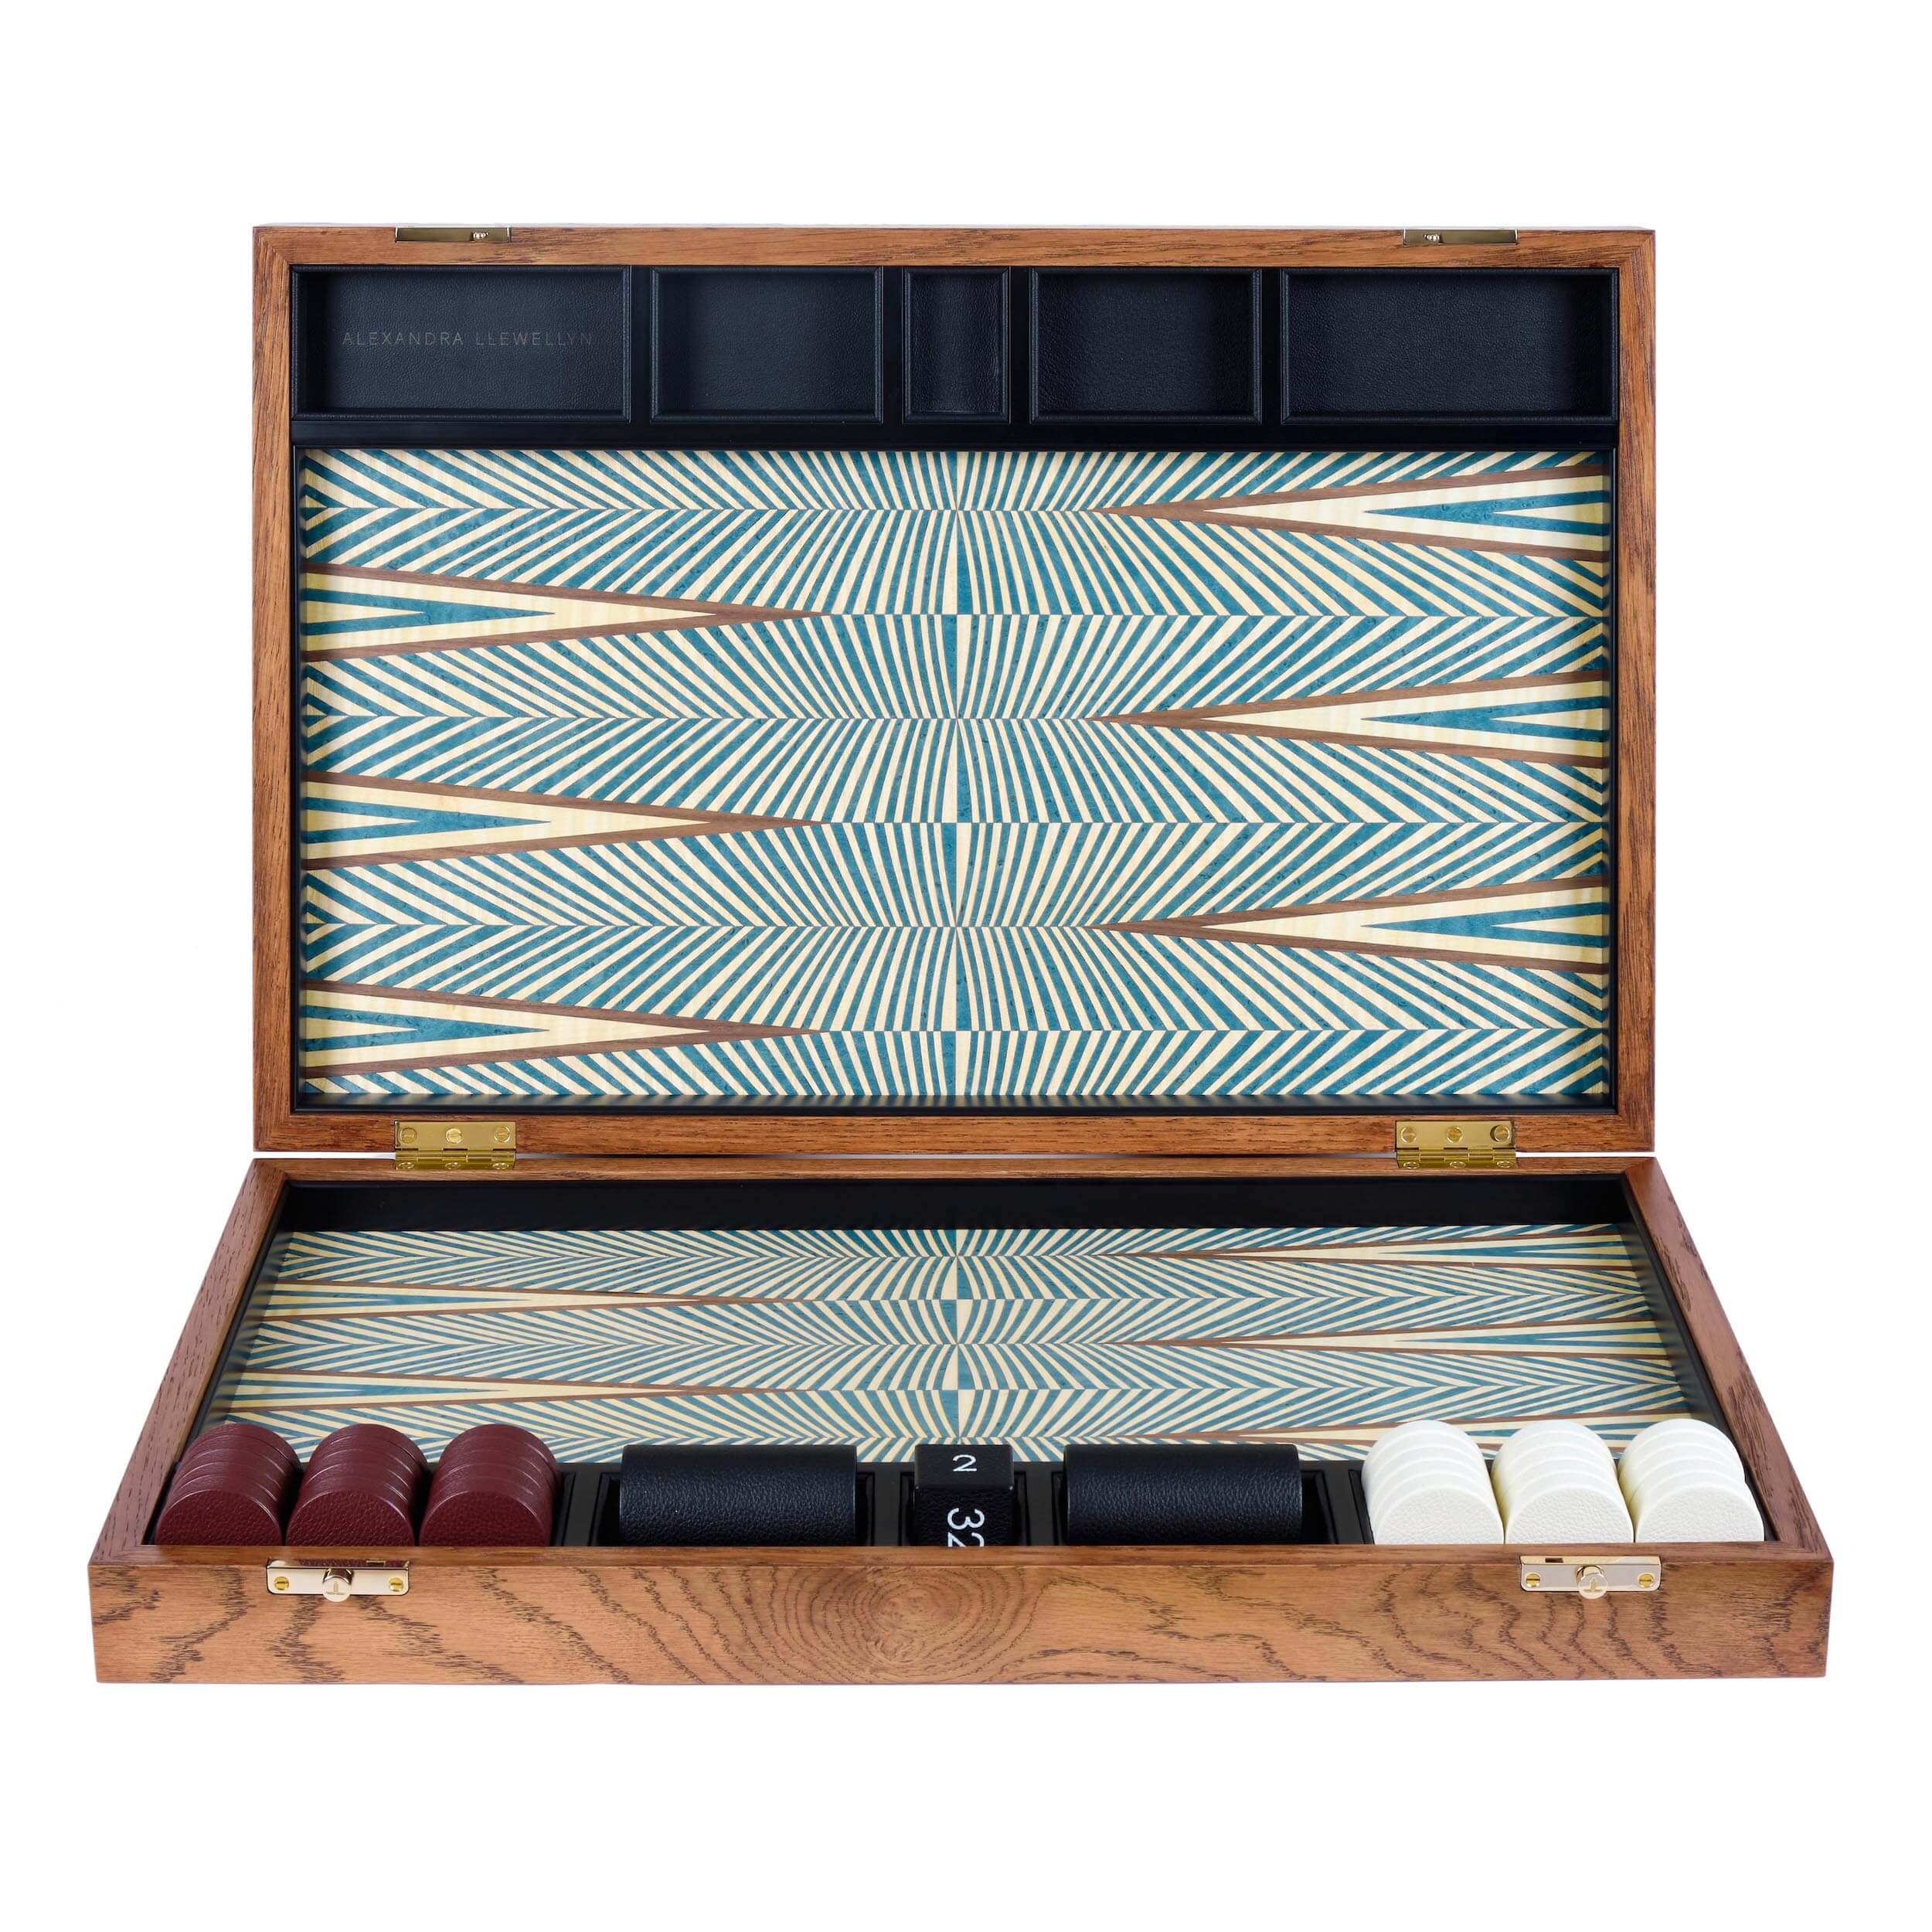 Alexandra Llewellyn Turquoise Backgammon Set upright